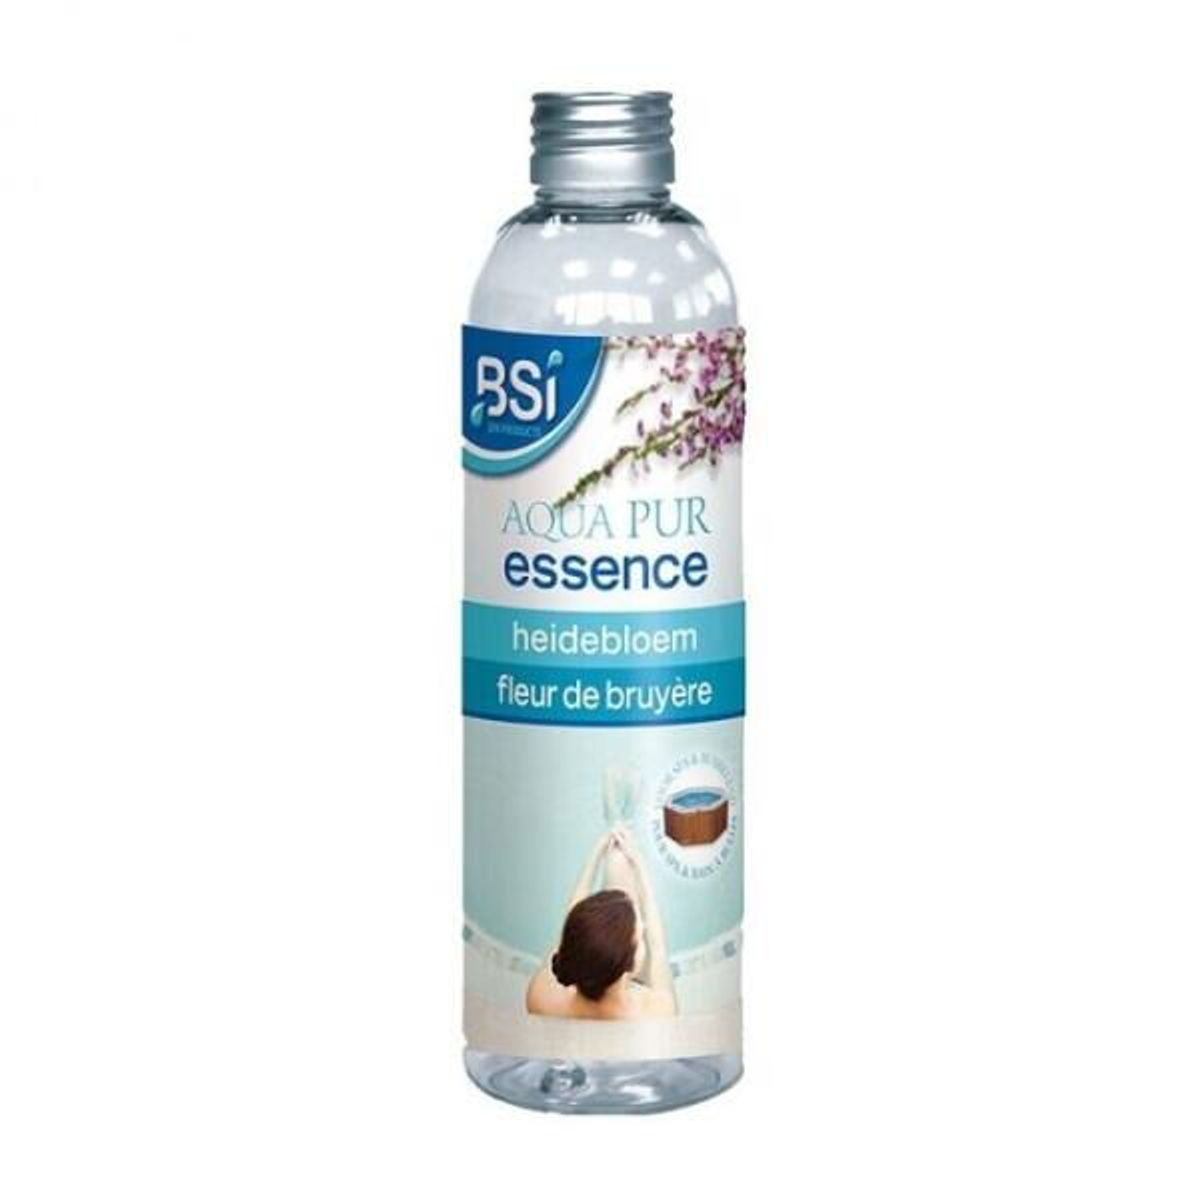 BSI Aqua Pur Essence Heidebloem 250 ml